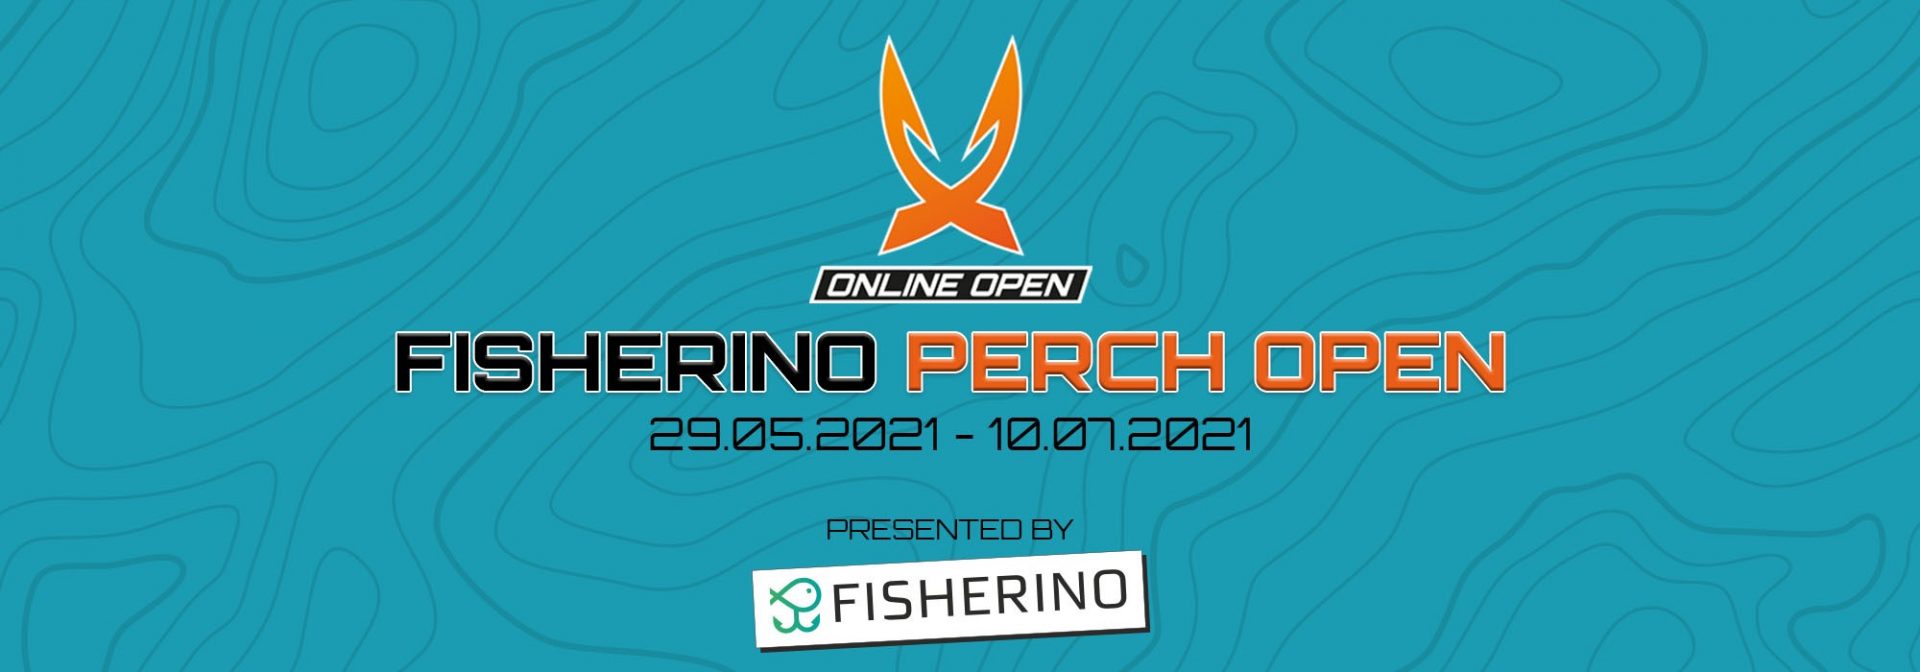 Fisherino Perch Open